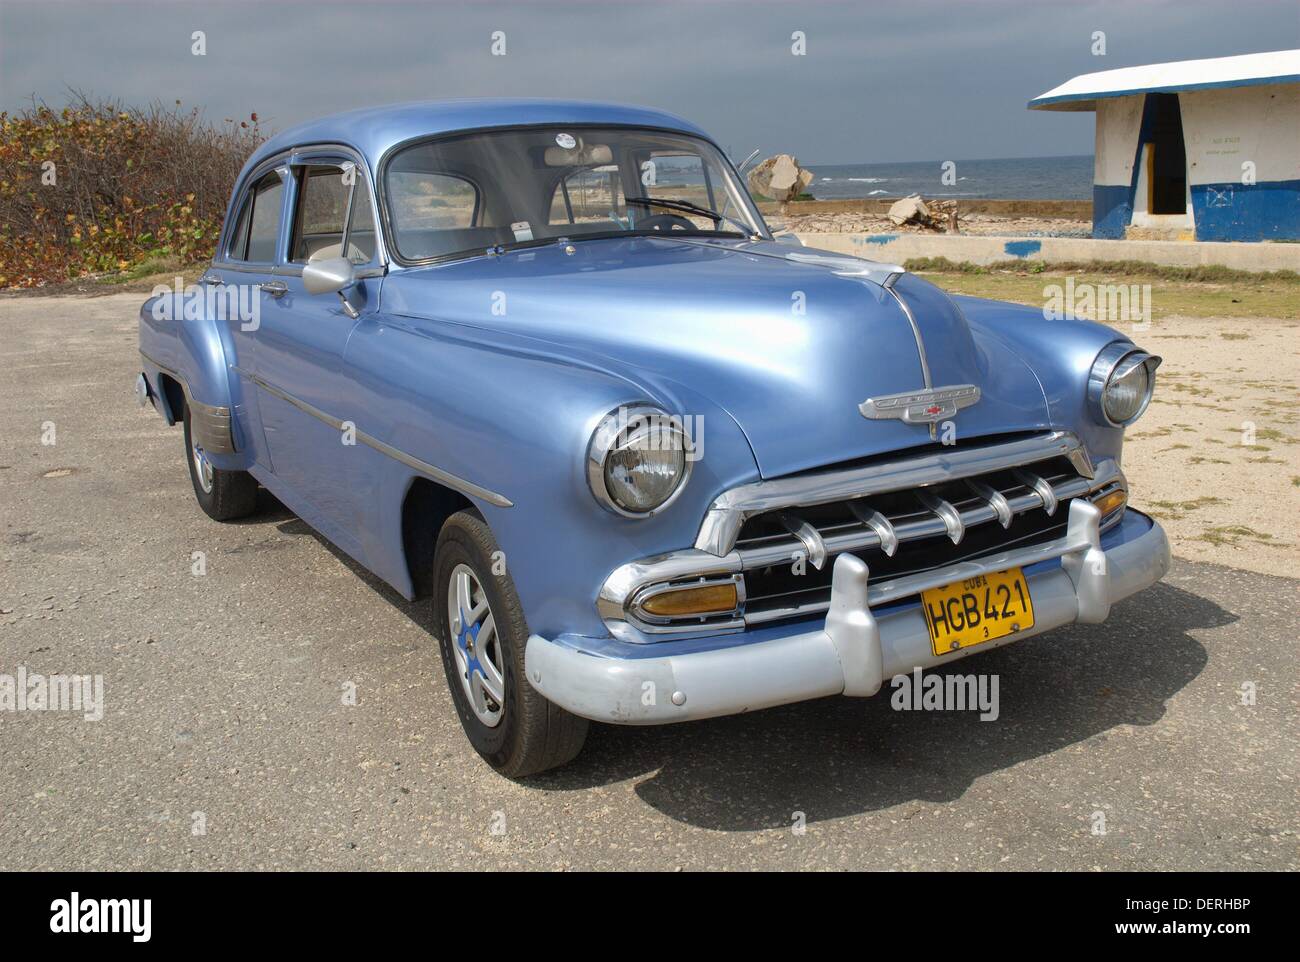 Un carro americano, modelo Cherovlet 1952, estacionado en La Habana, Cuba  Stock Photo - Alamy